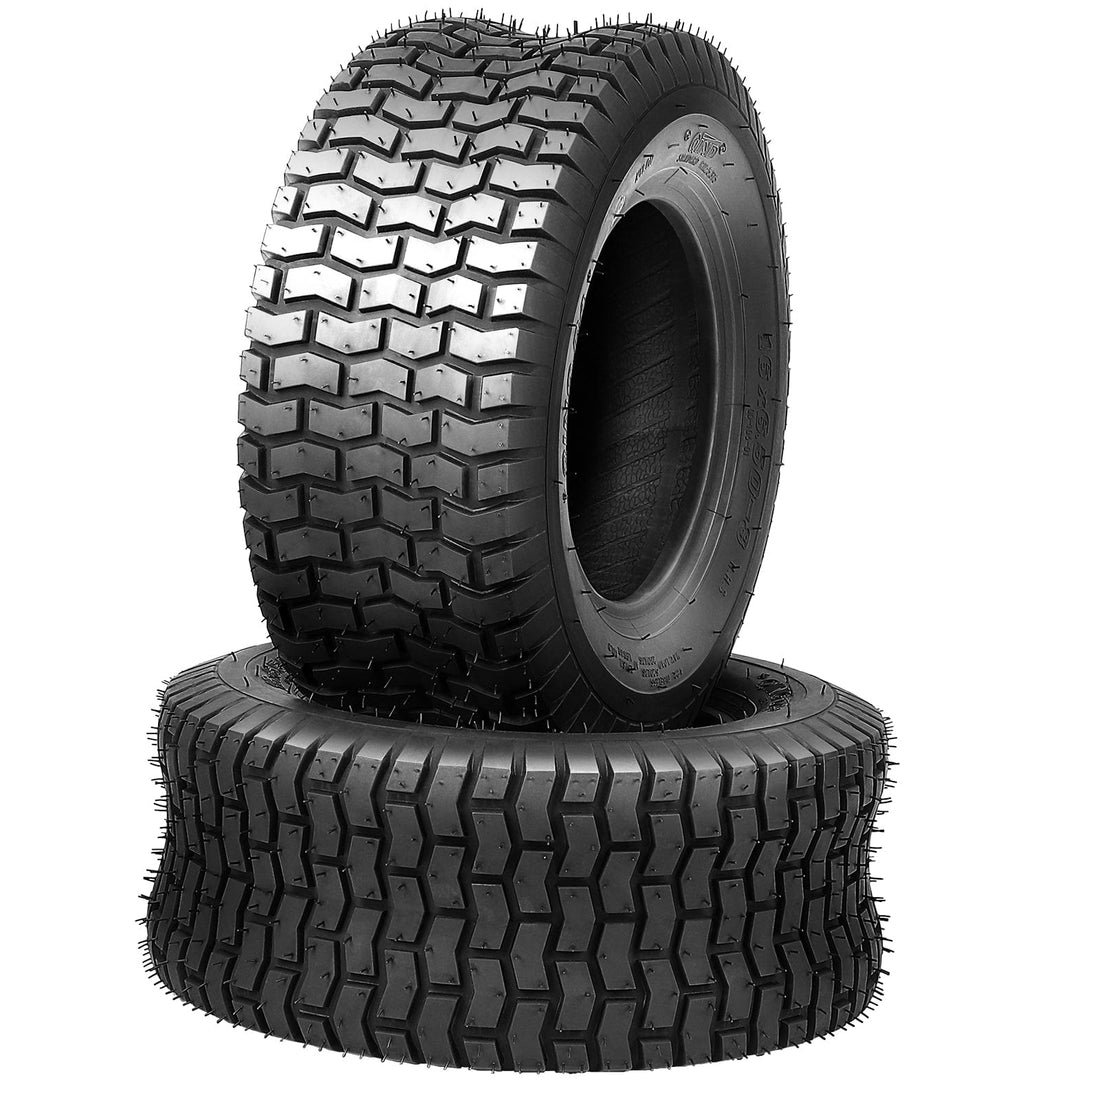 13x5.00-6 Mower Tire 2Pcs for Garden & Riding Mowers